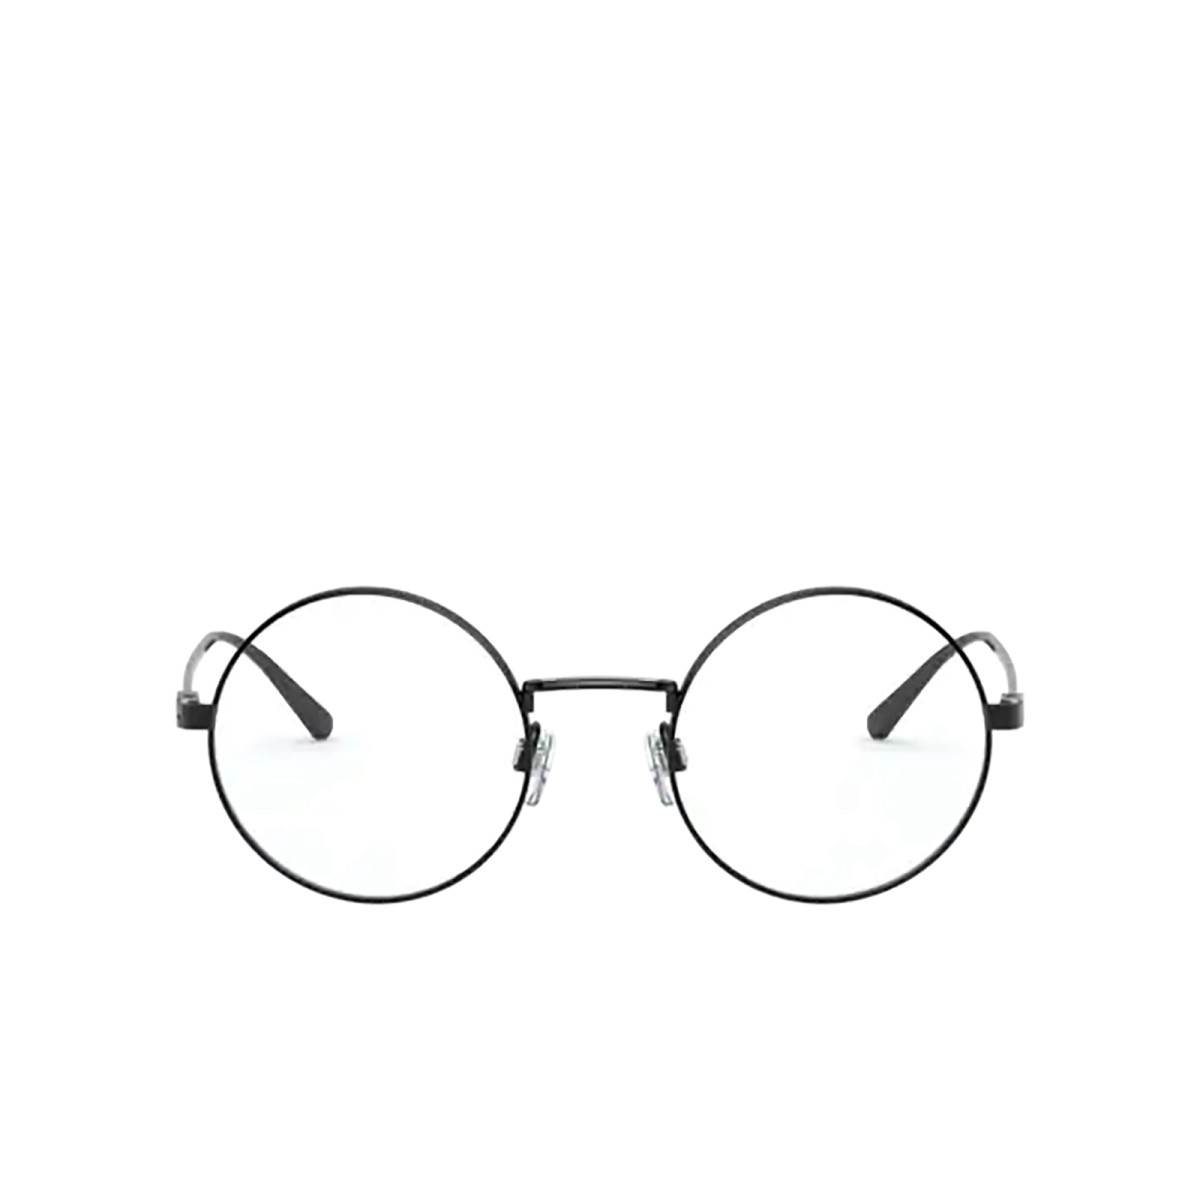 Ralph Lauren® Round Eyeglasses: RL5109 color Shiny Black 9003 - front view.